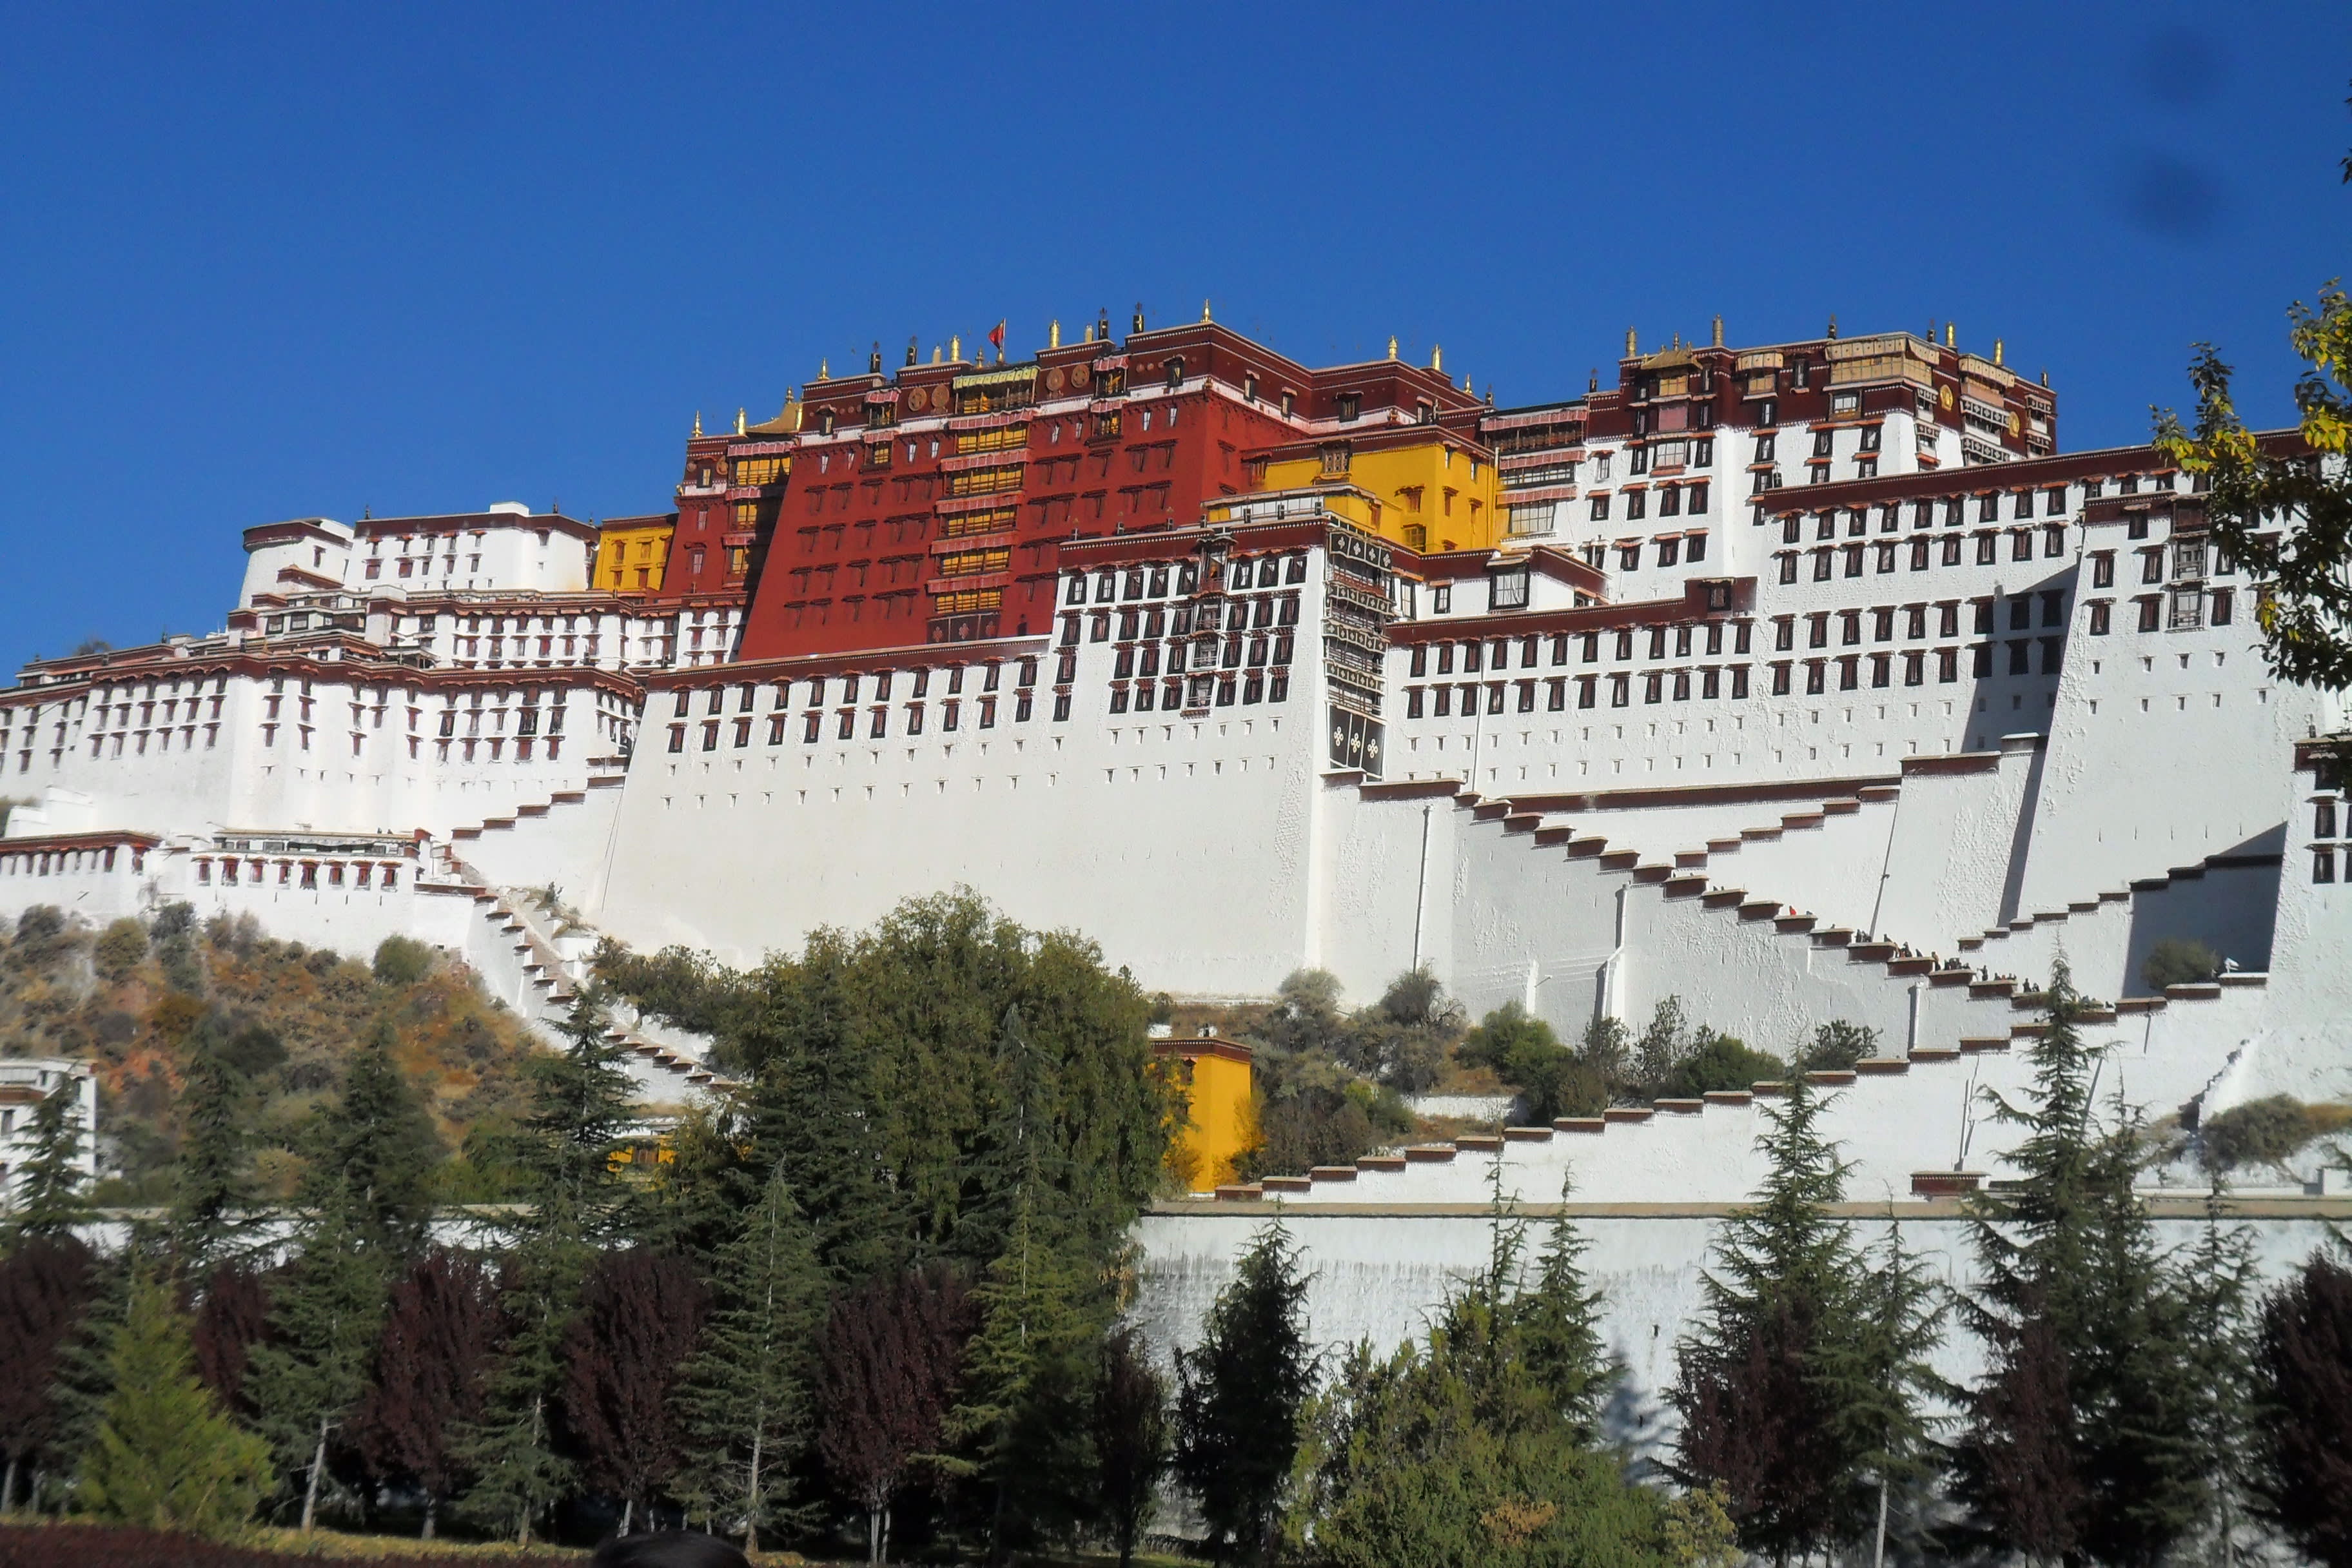 tibet travel review